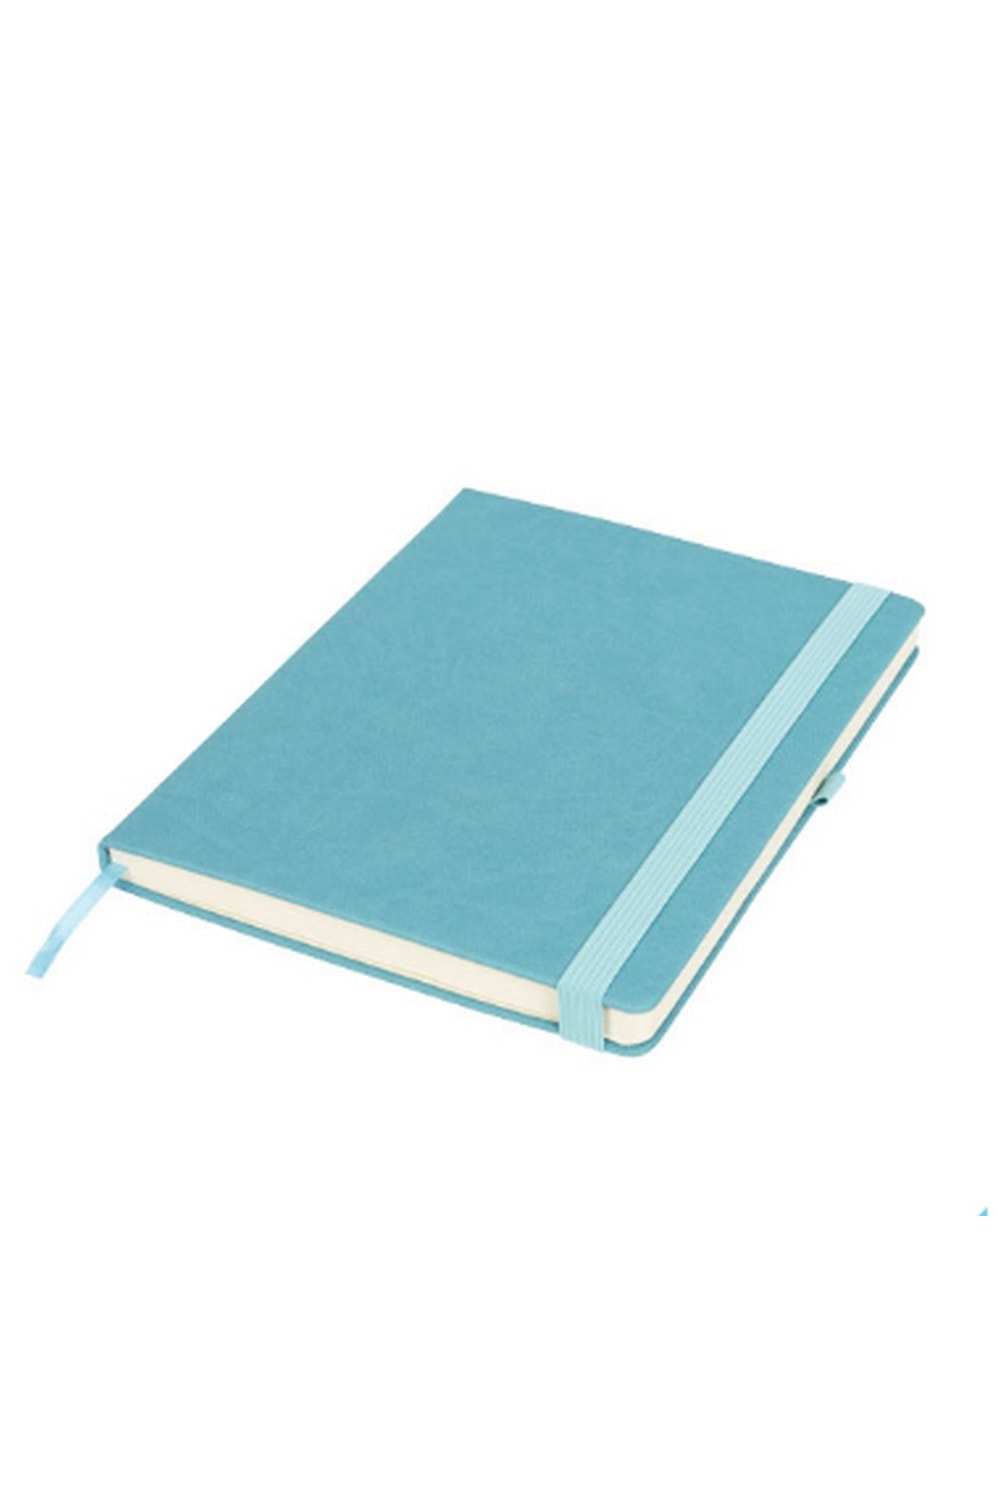 Rivista notebook large (Aqua Blue) (Large)